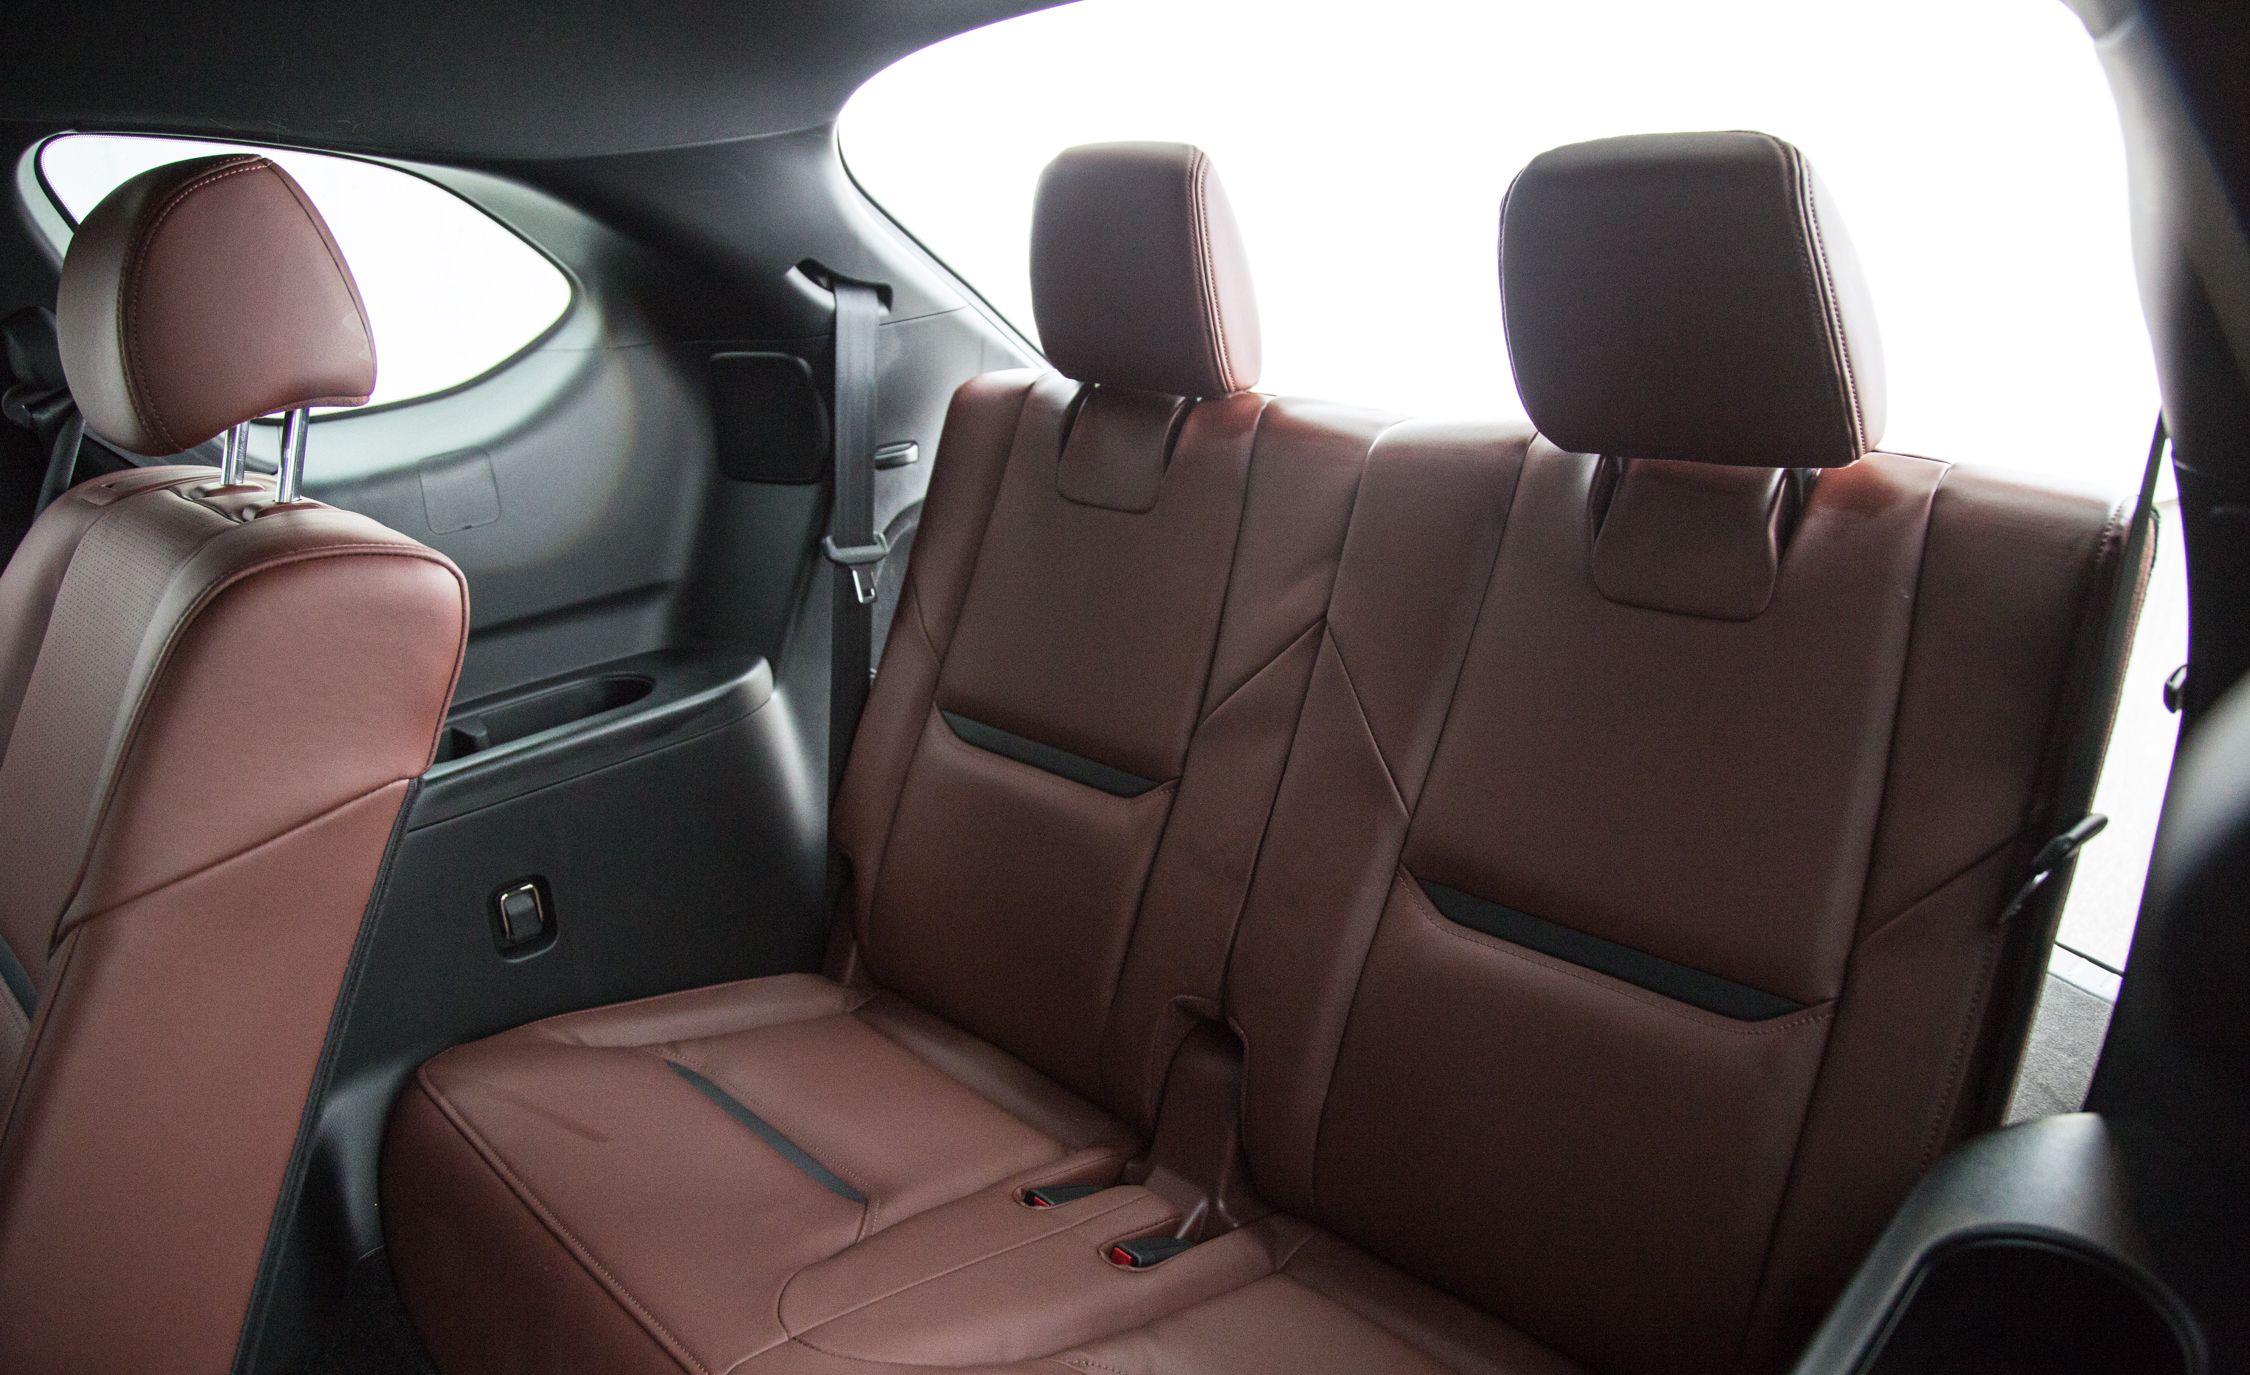 2017 Mazda CX 9 Interior Seats Rear 3rd Row (View 15 of 28)